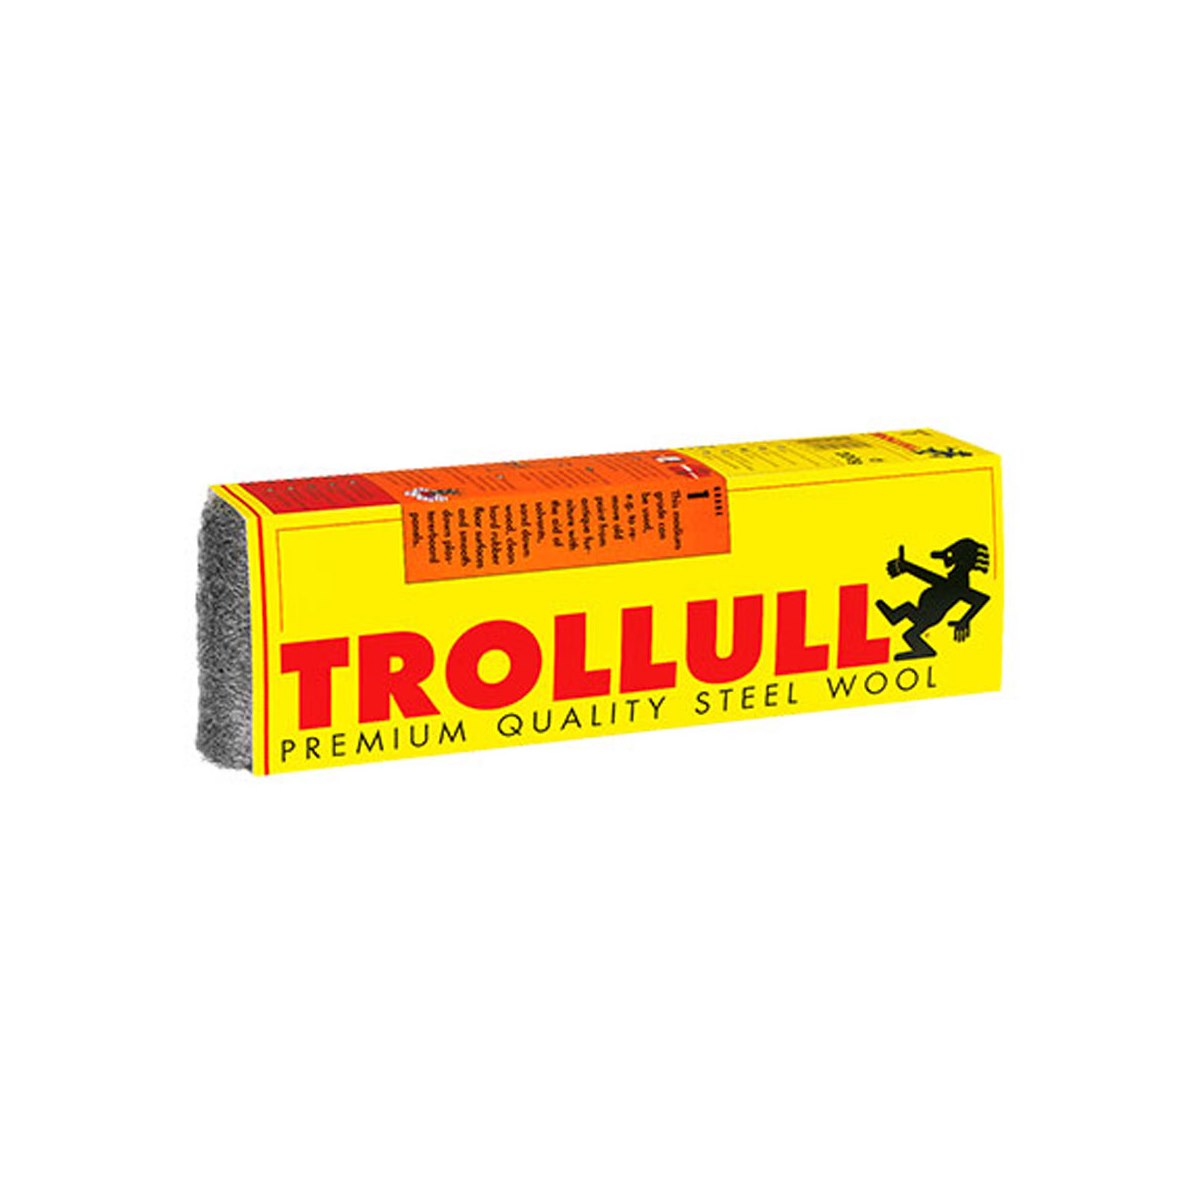 Trollull Steel Wool 200g Sleeve 0000